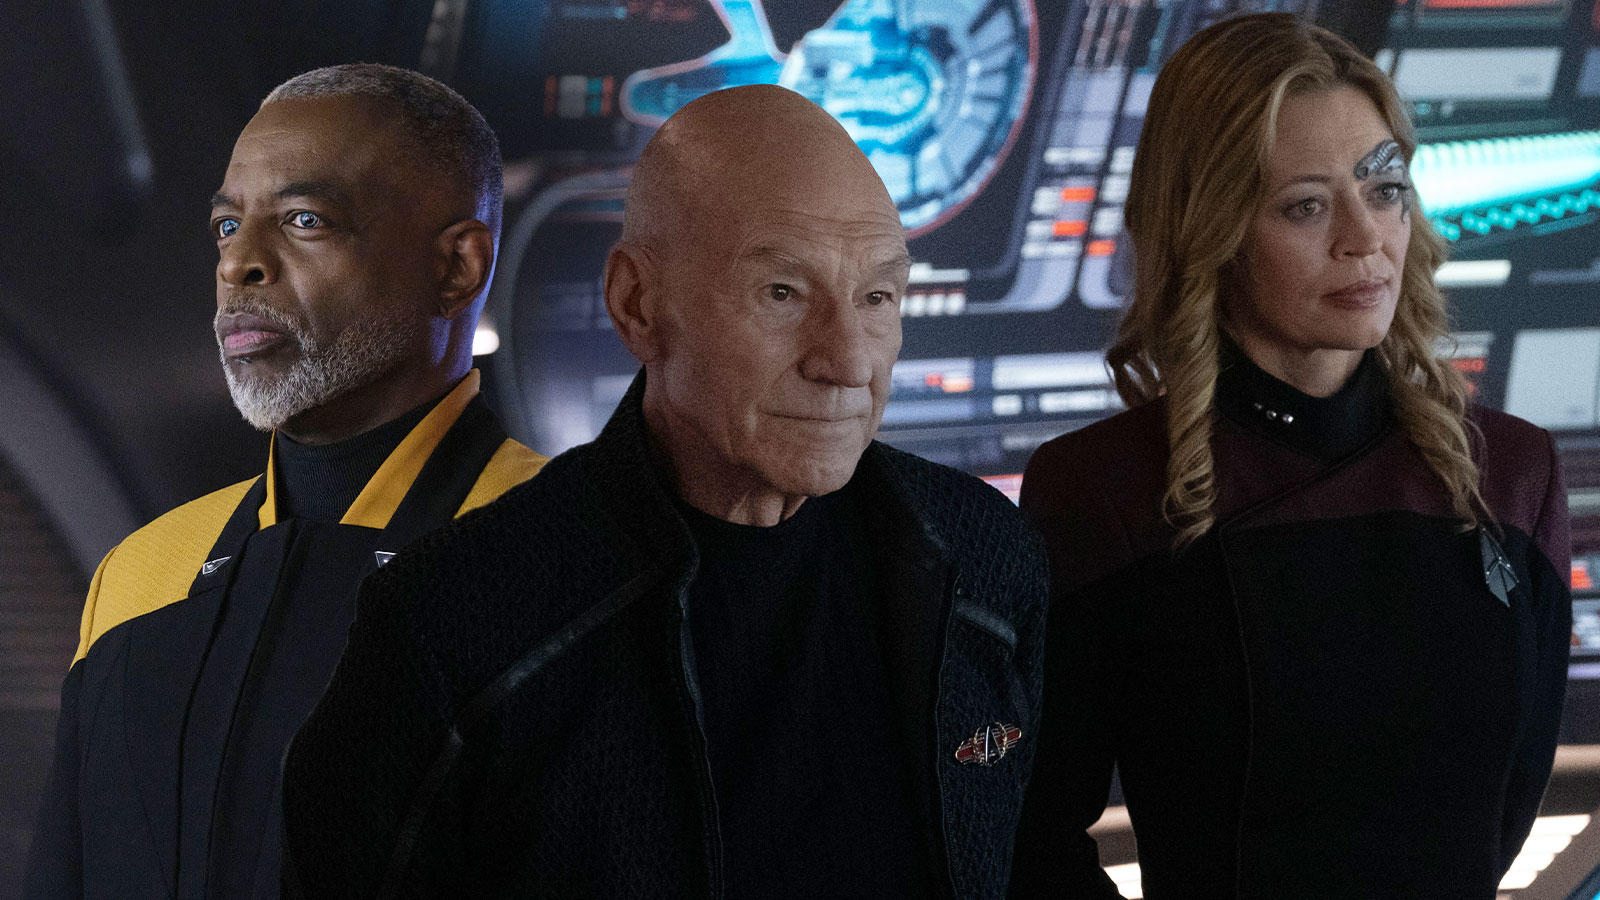 New photos + a sneak peek from Star Trek: Picard Season 3 Episode 6 “Bounty”